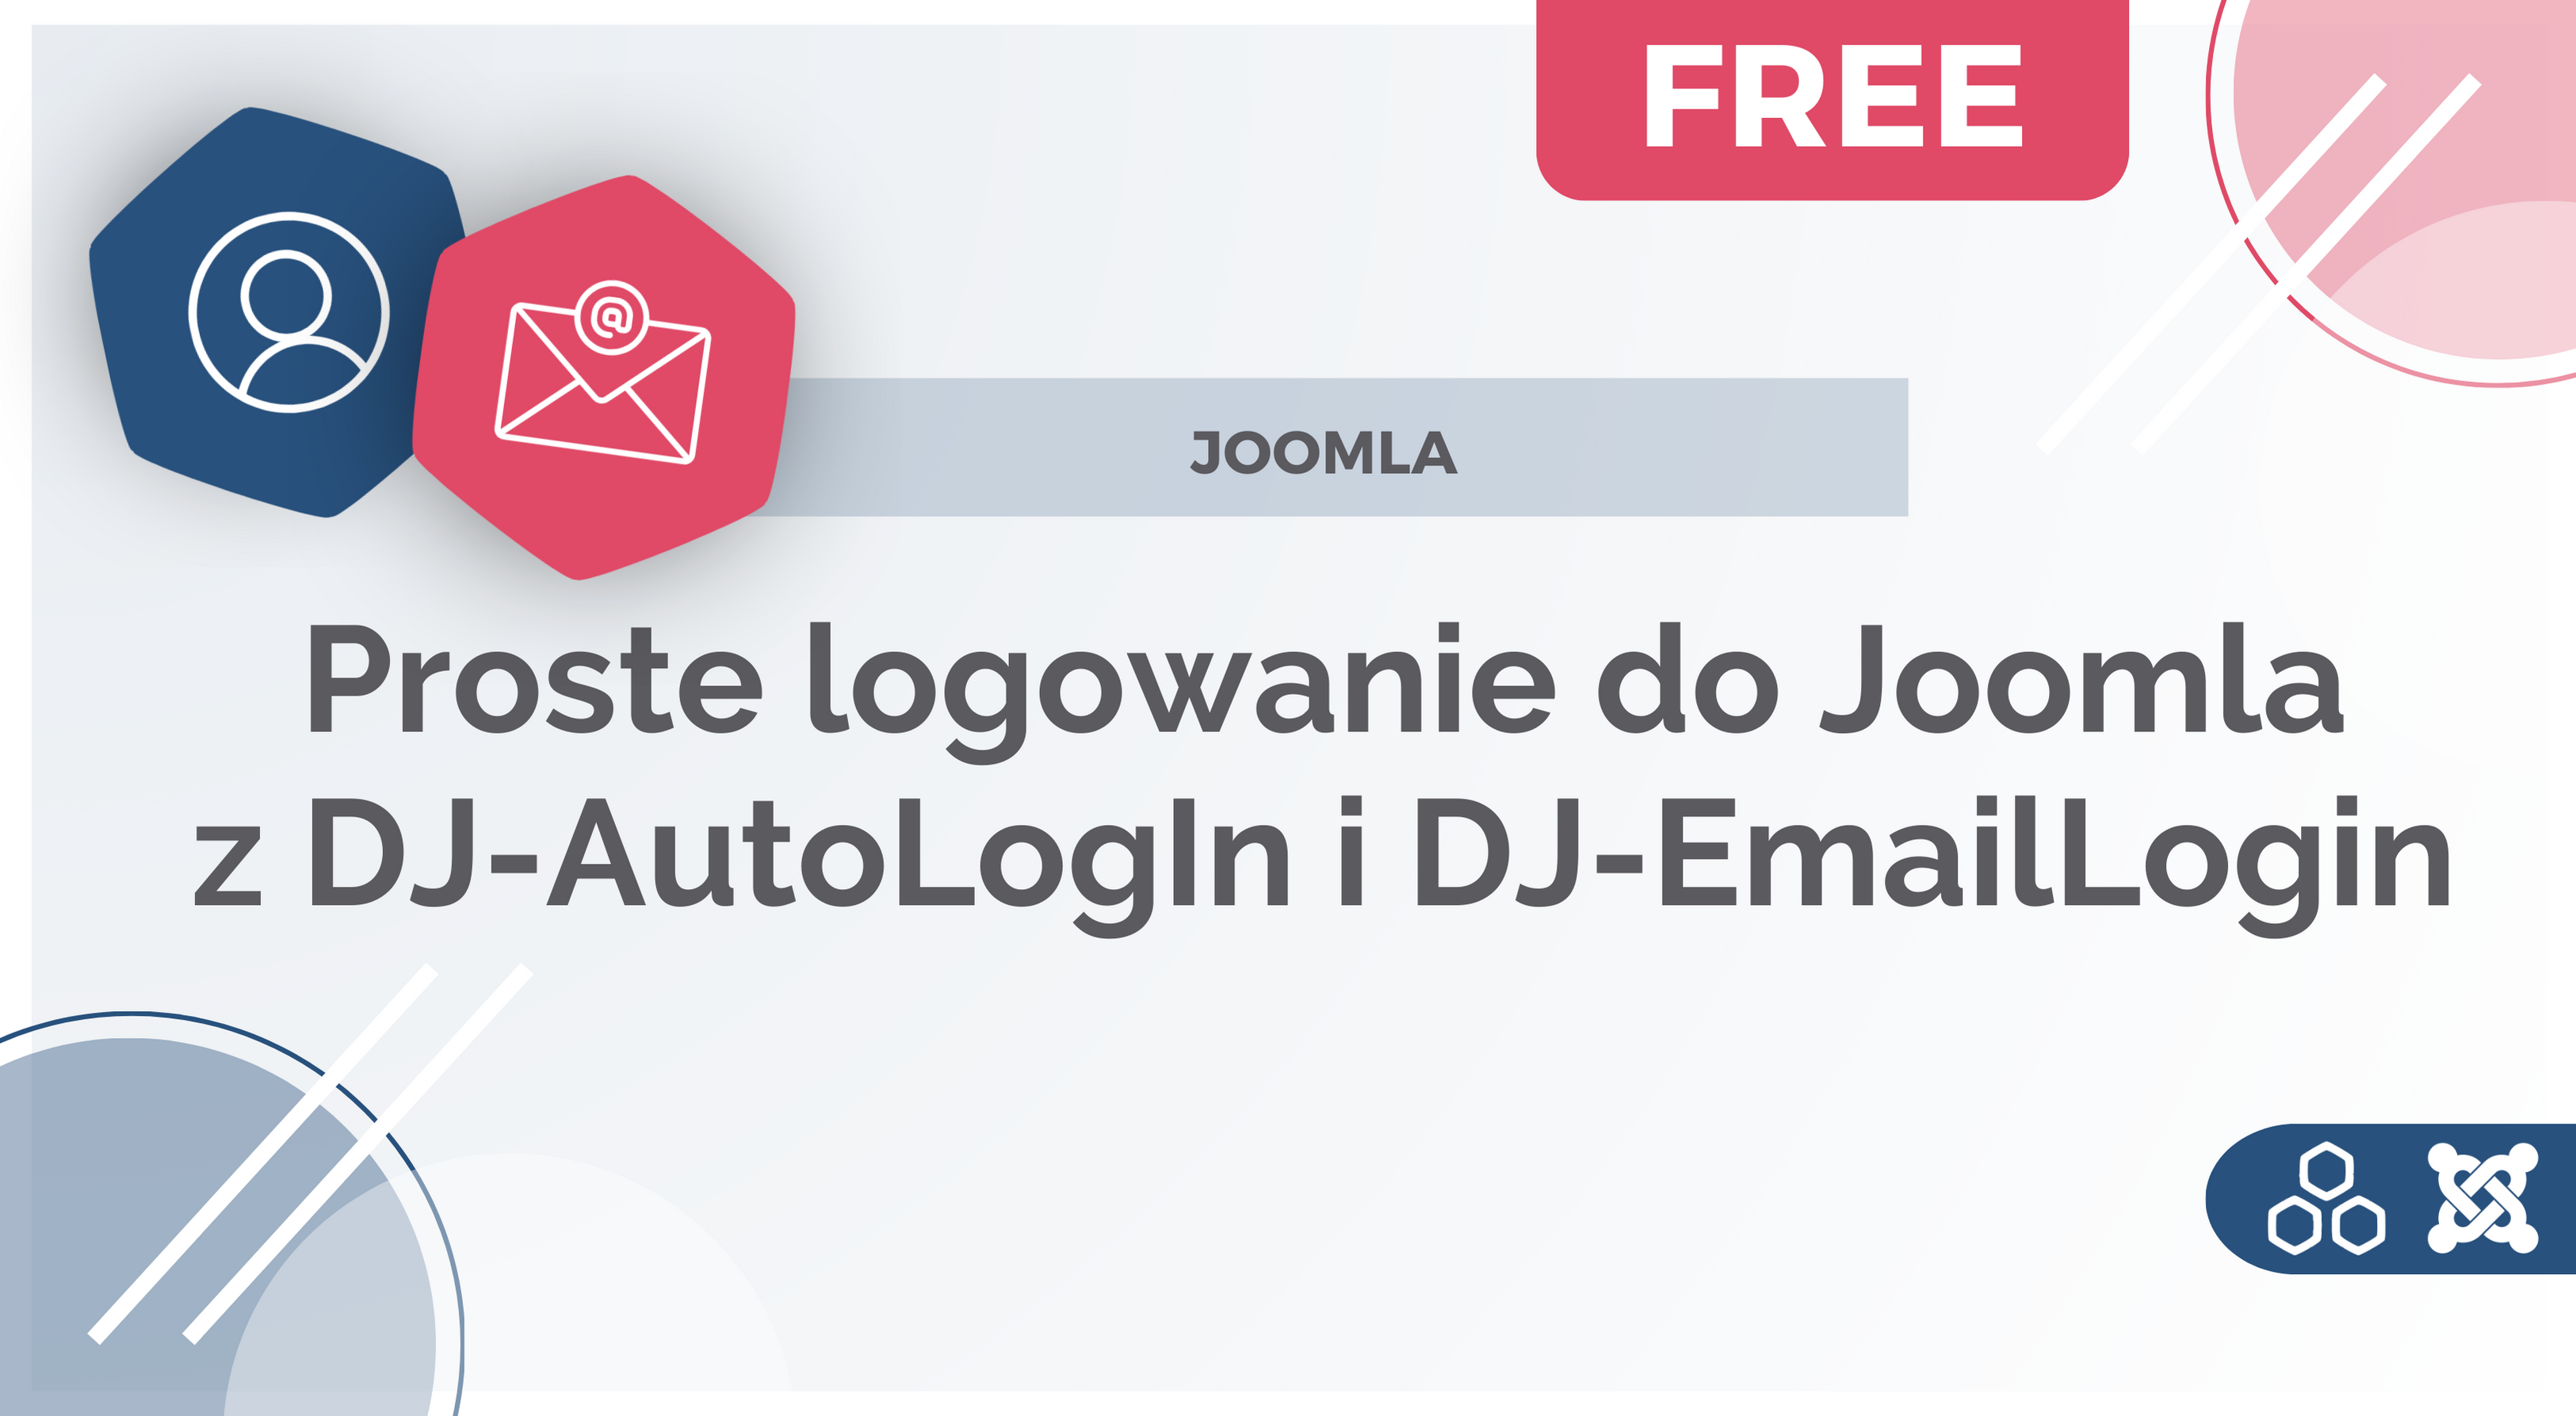 DJ-AutoLogIn i DJ-EmailLogin